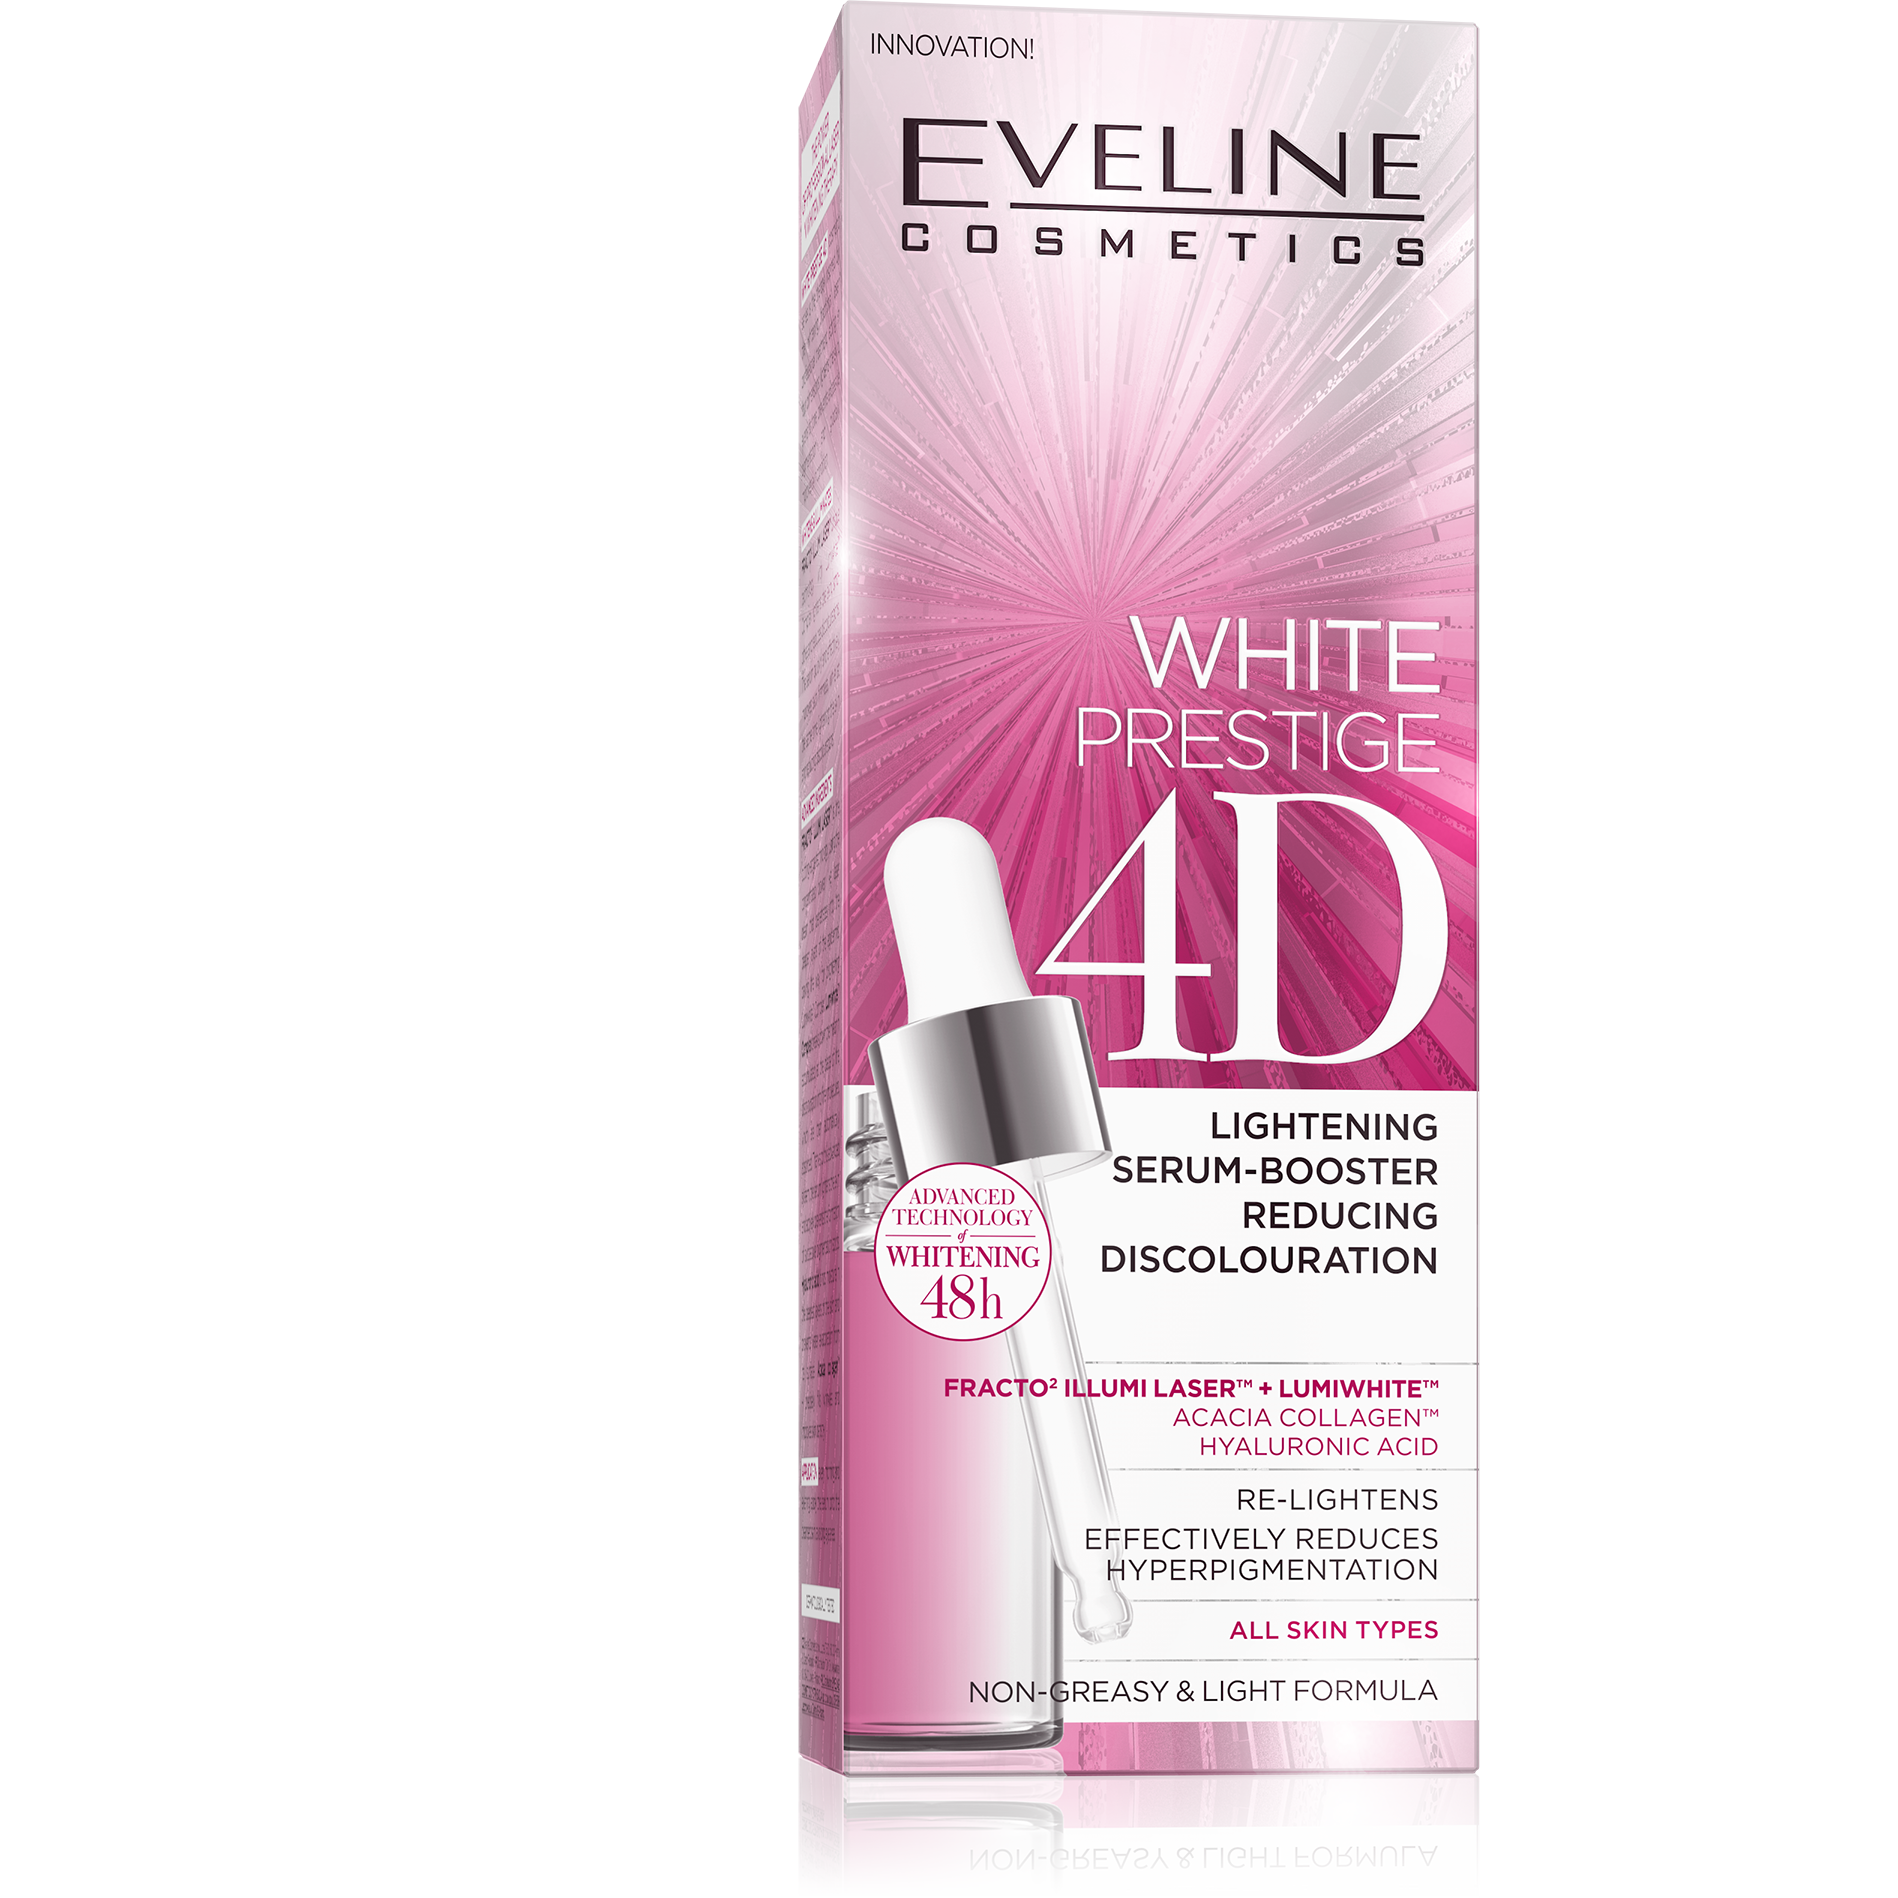 White Prestige 4D Lightening Serum Booster Reducing Discoloration